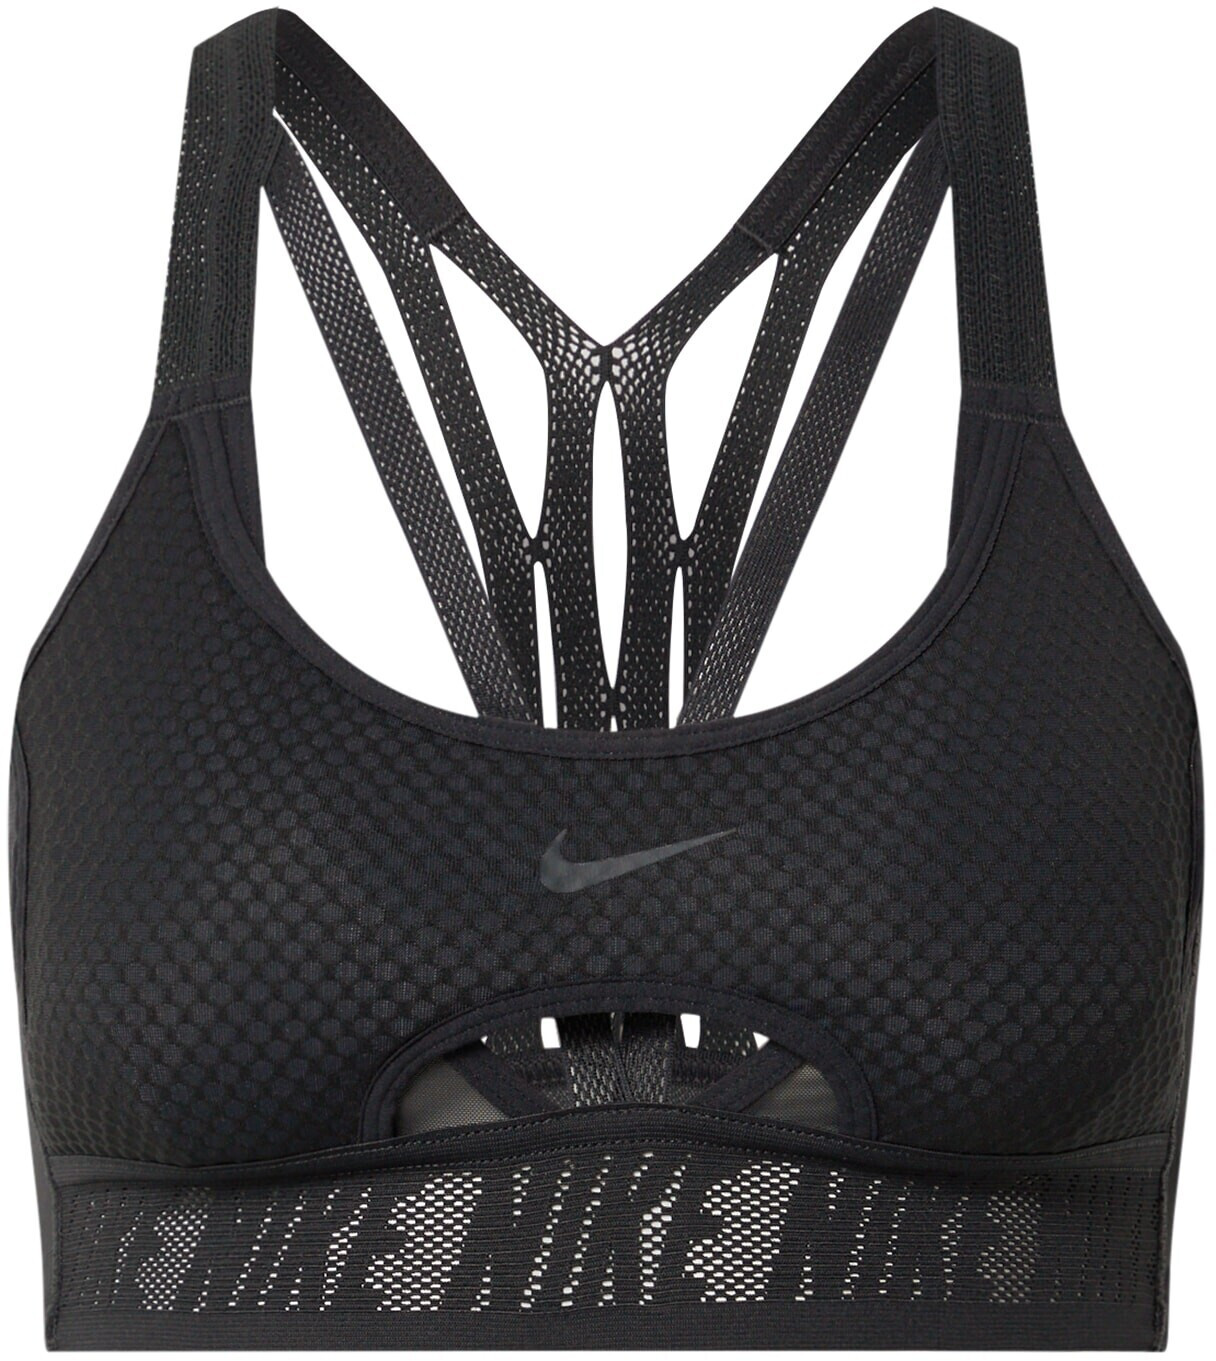 Nike Training Indy Ultrabreathe light support sports bra in gray